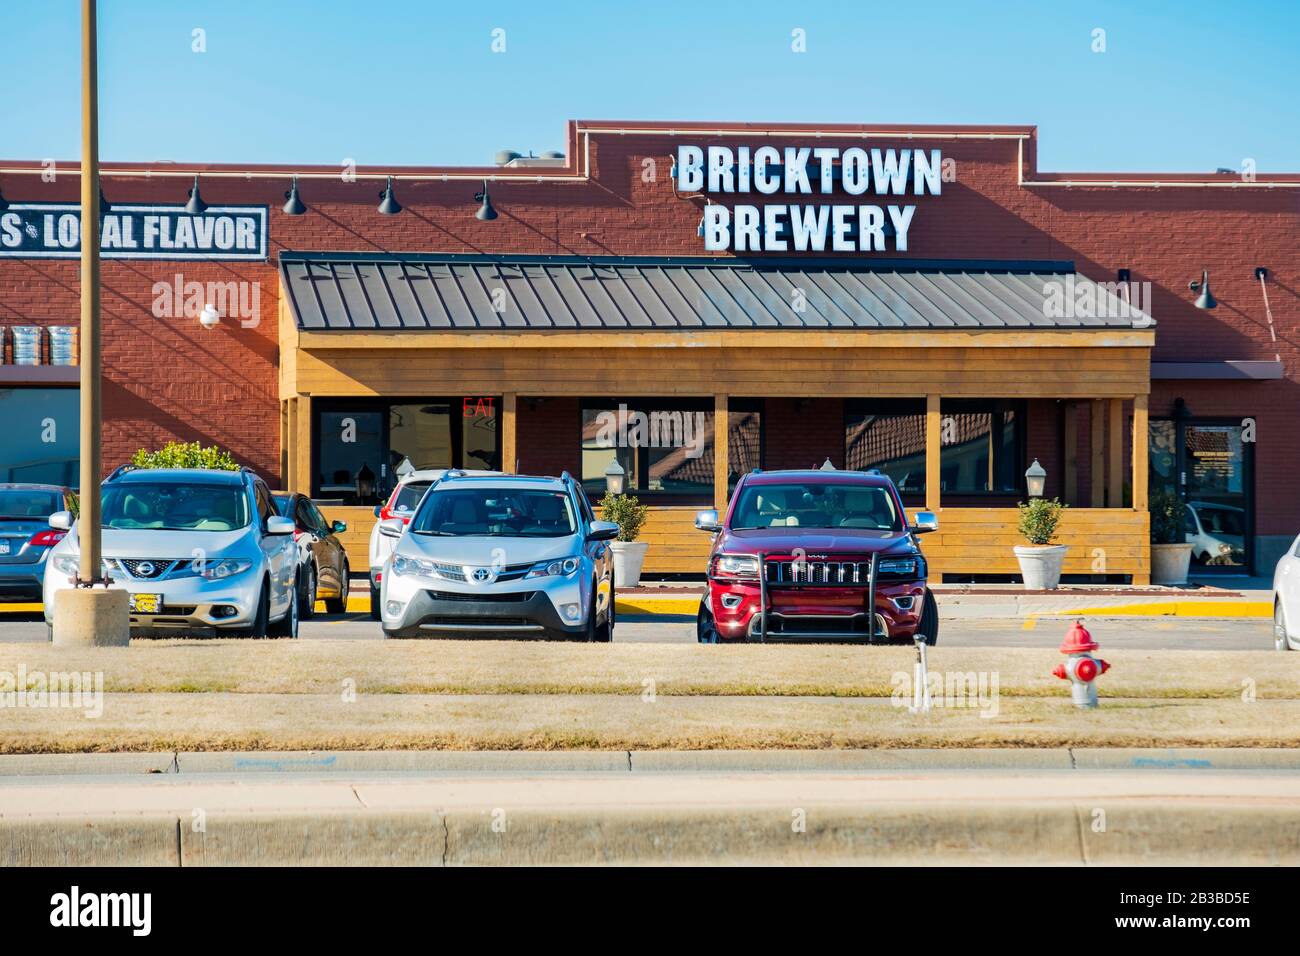 Bricktown Brewery, a chain establishment featuring craft beers and good food. Wichita, Kansas, USA. Stock Photo